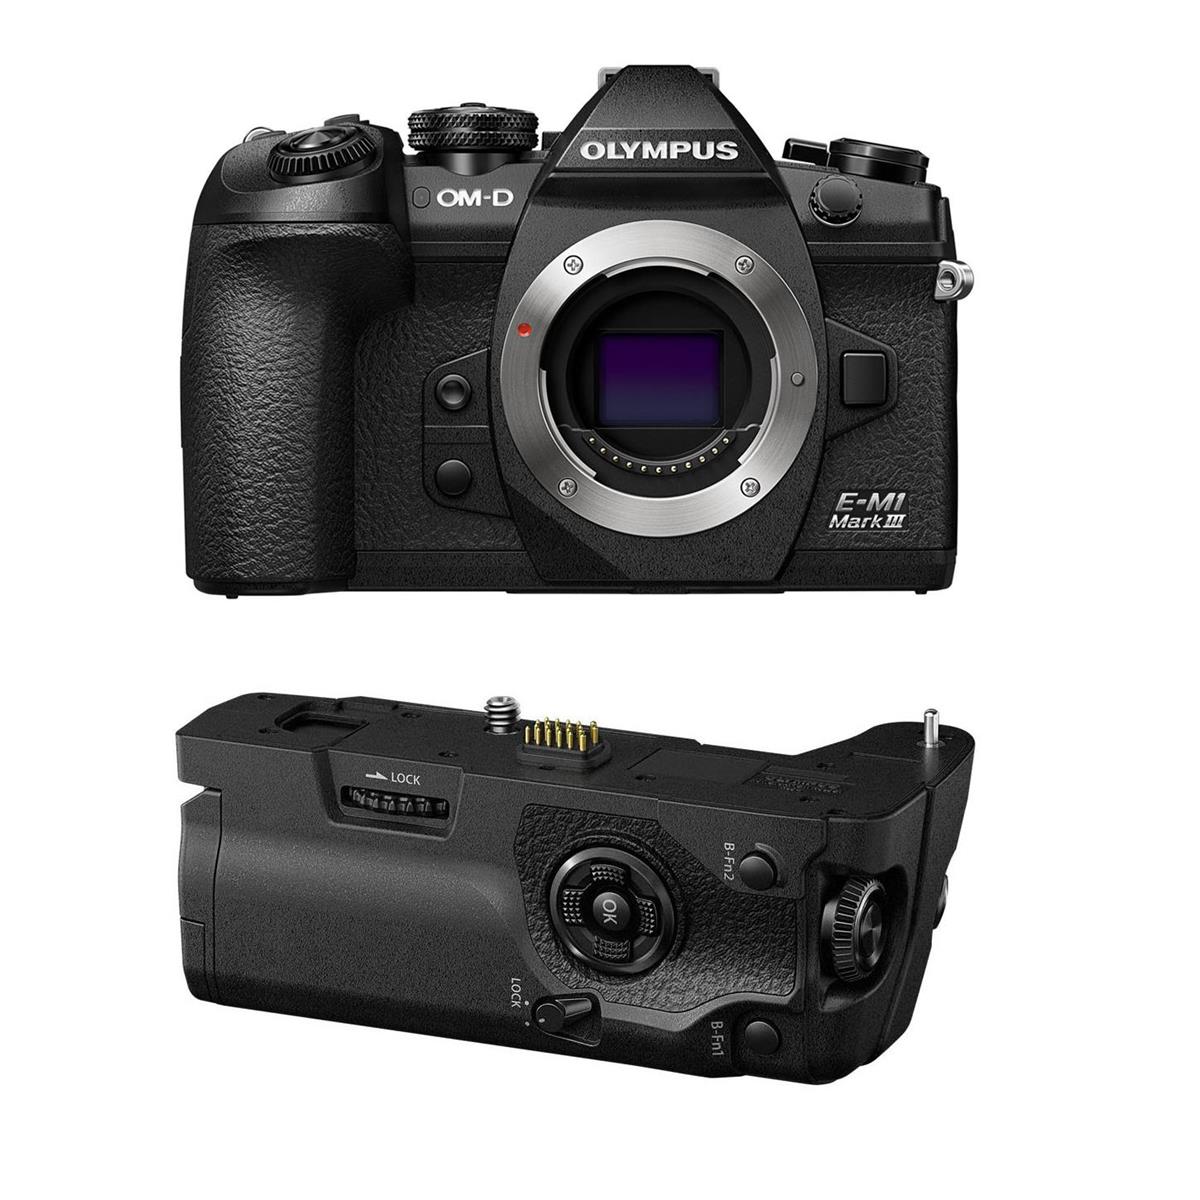 Image of Olympus OM-D EM1 Mark III Mirrorless Camera Body Black with Battery Grip